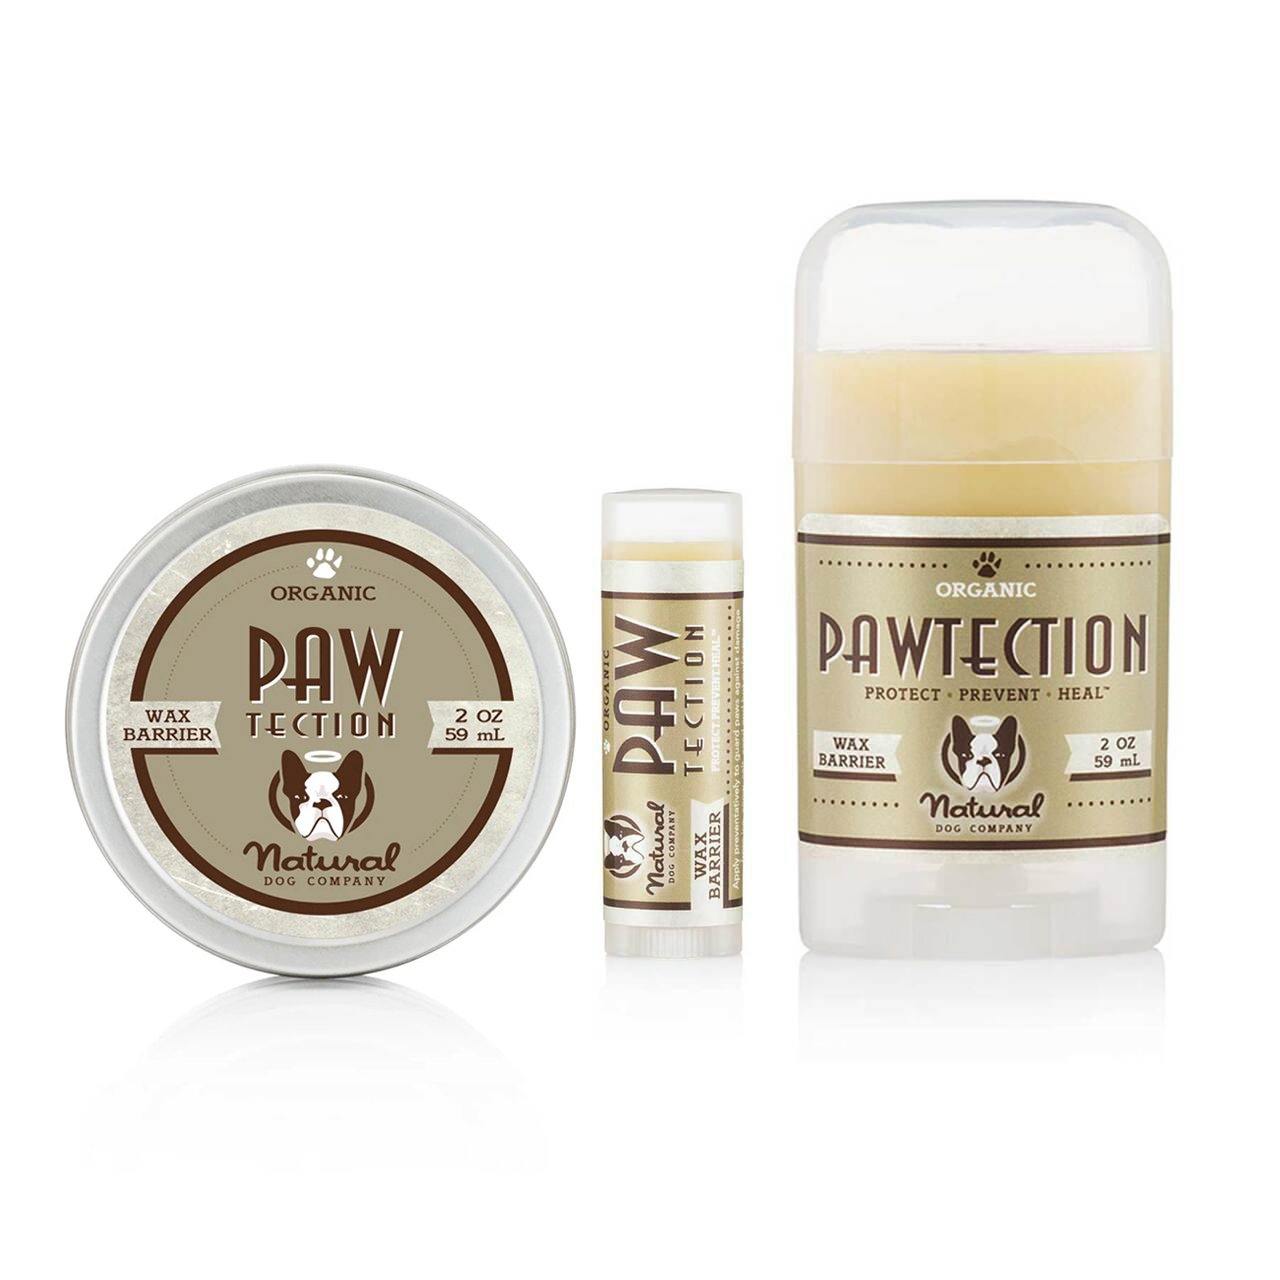 Pawtection balm - Pet-à-Porter